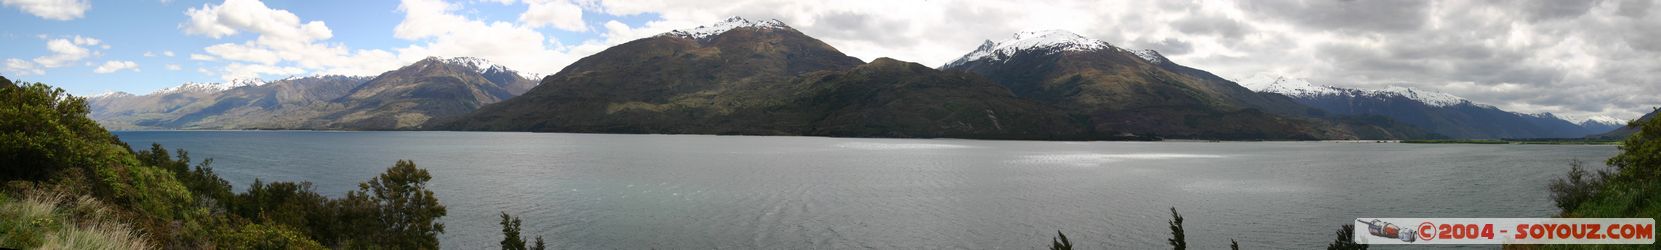 Lake Wanaka  - panorama
Mots-clés: New Zealand South Island panorama Lac Montagne